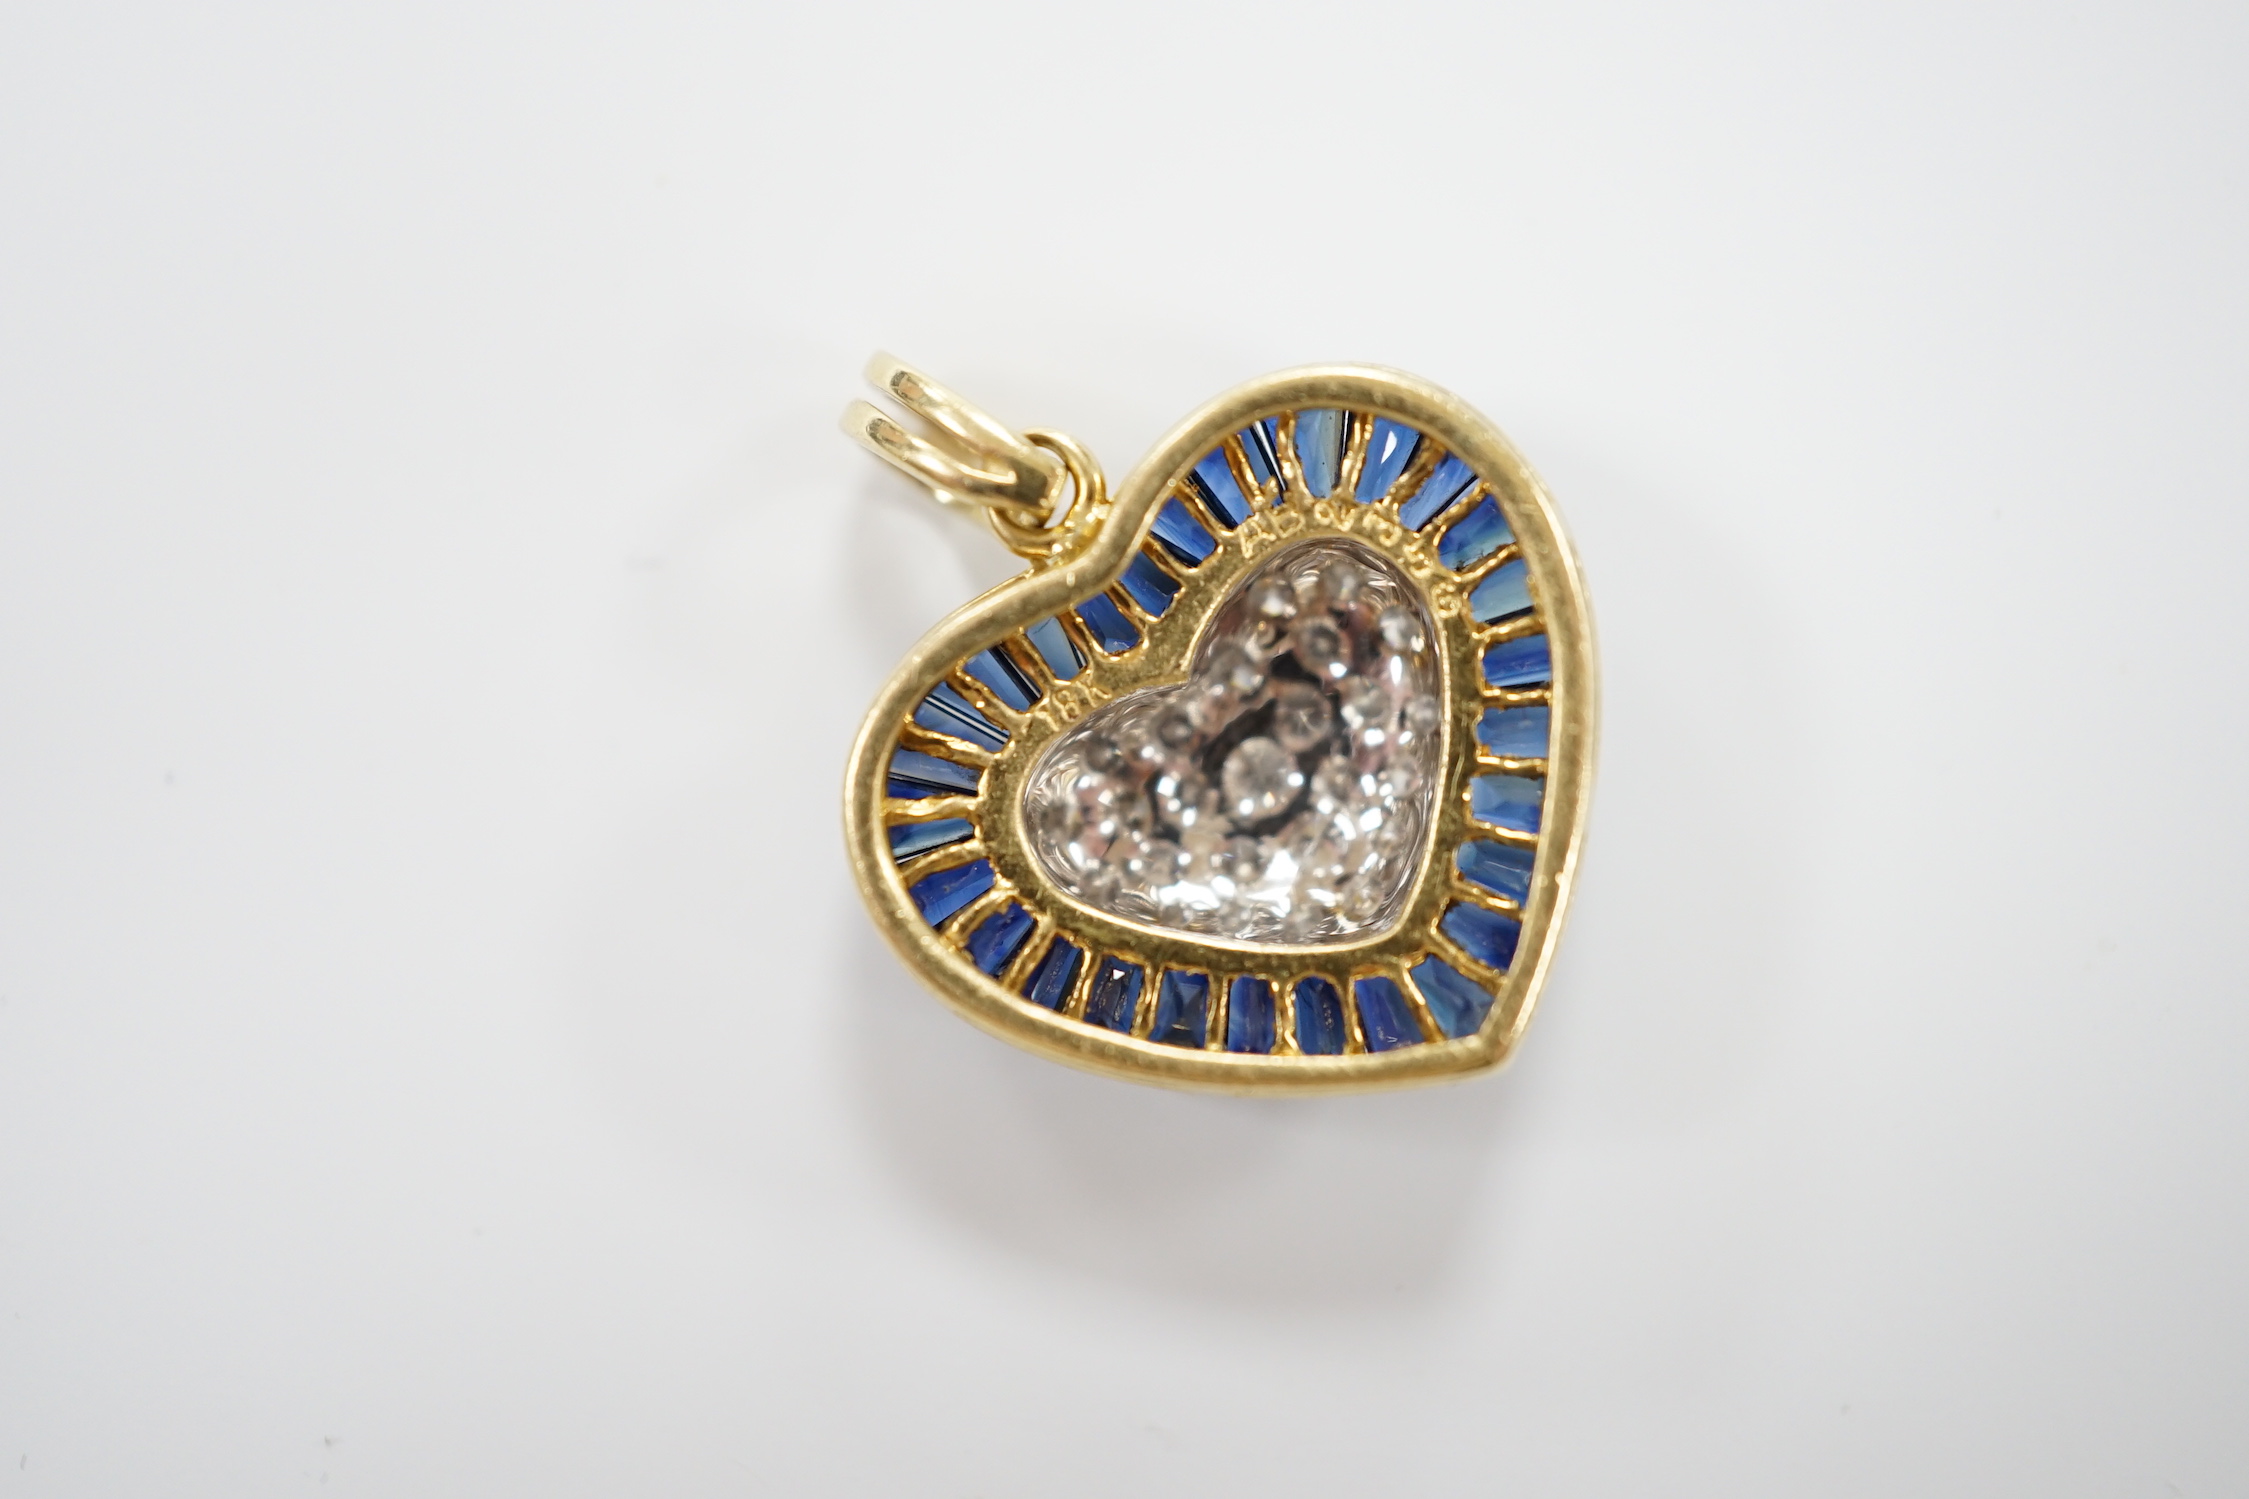 A modern 18k, pave set sapphire and diamond heart shaped pendant, overall 25mm, gross weight 4.9 grams.